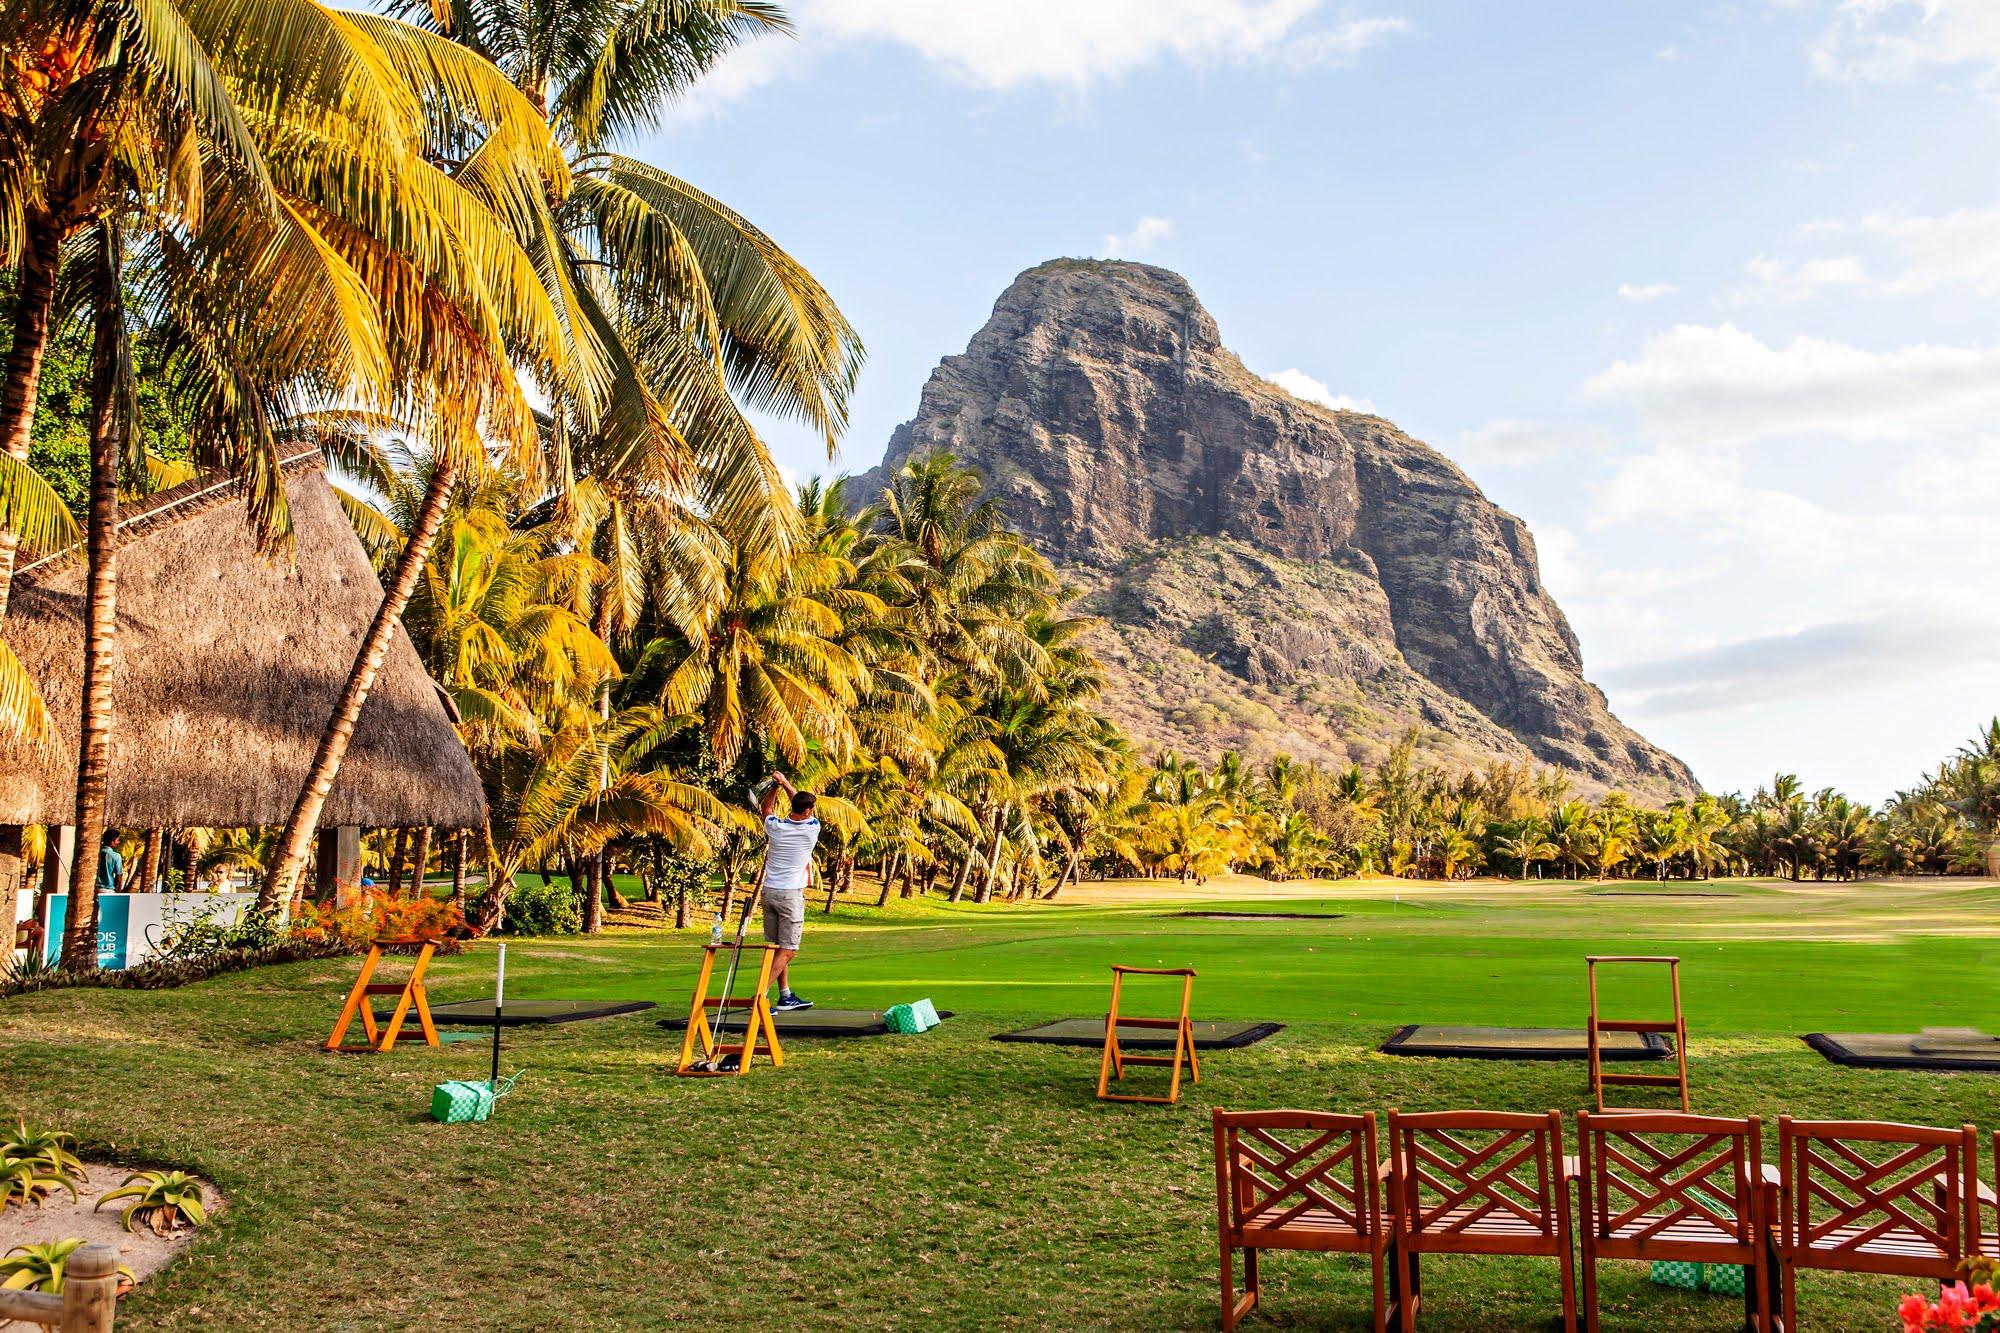 Playing golf on the Mauritius island